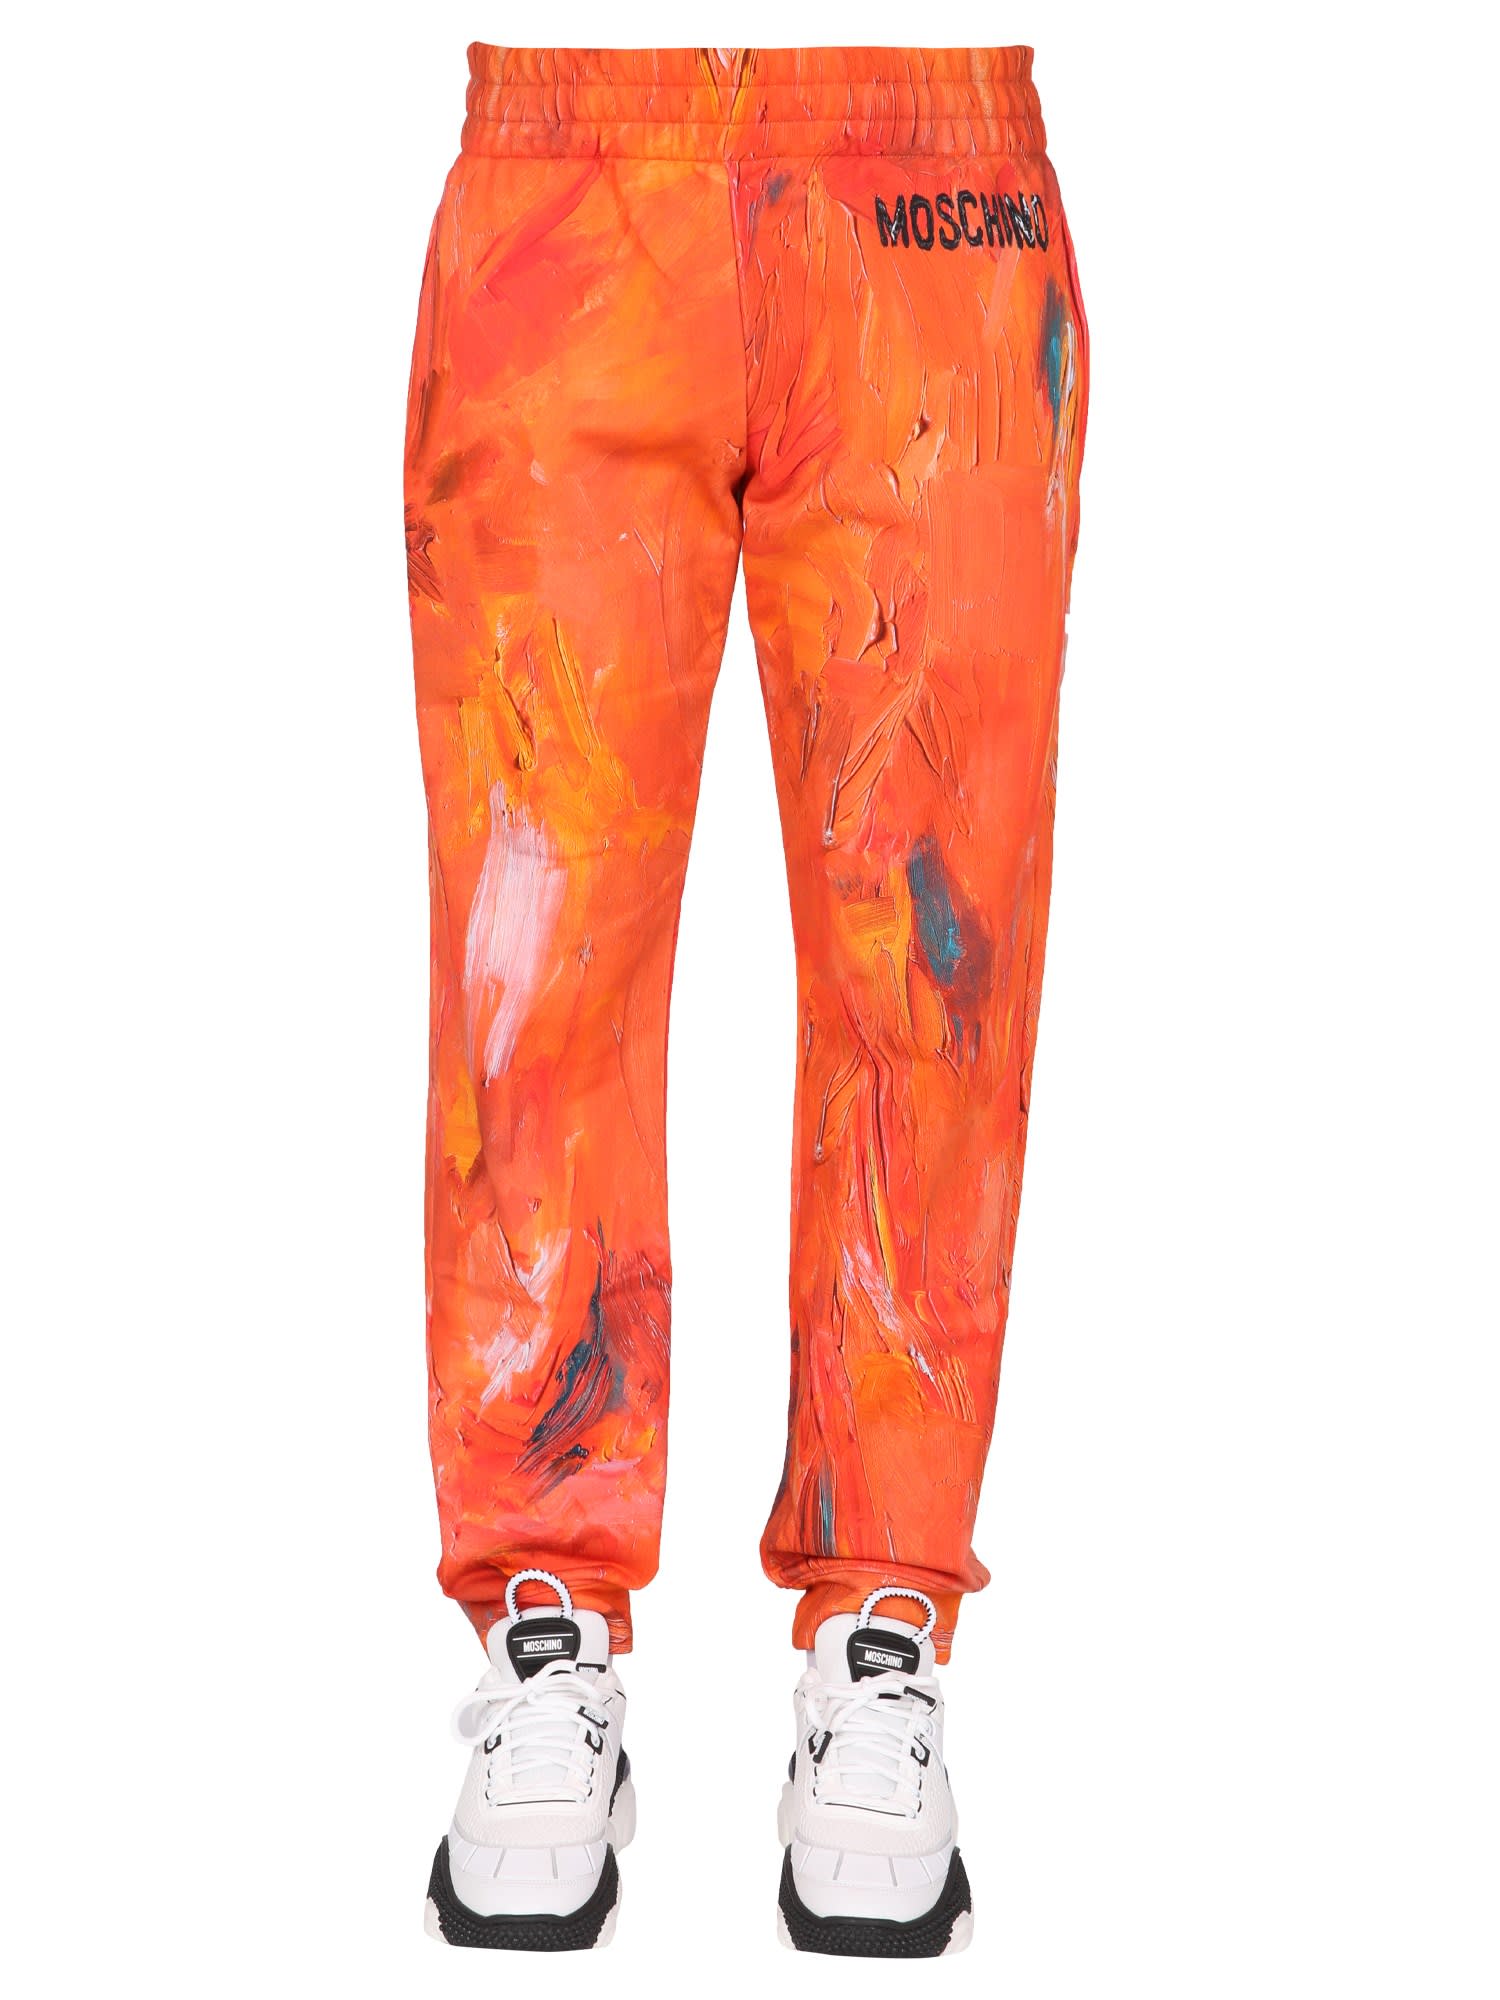 Moschino Painting Jogging Pants